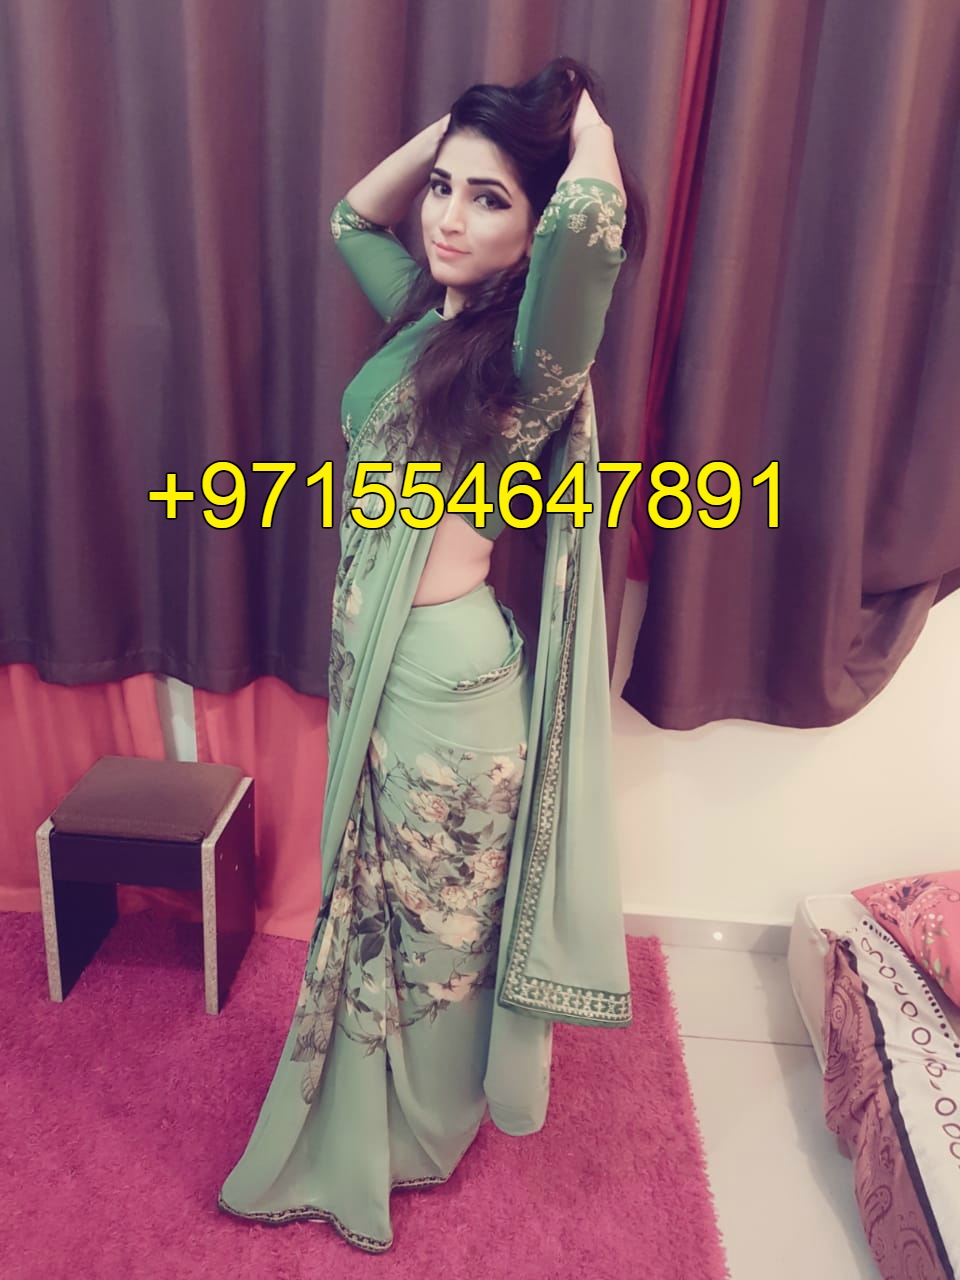 Verified Call Girls in Dubai +971554647891